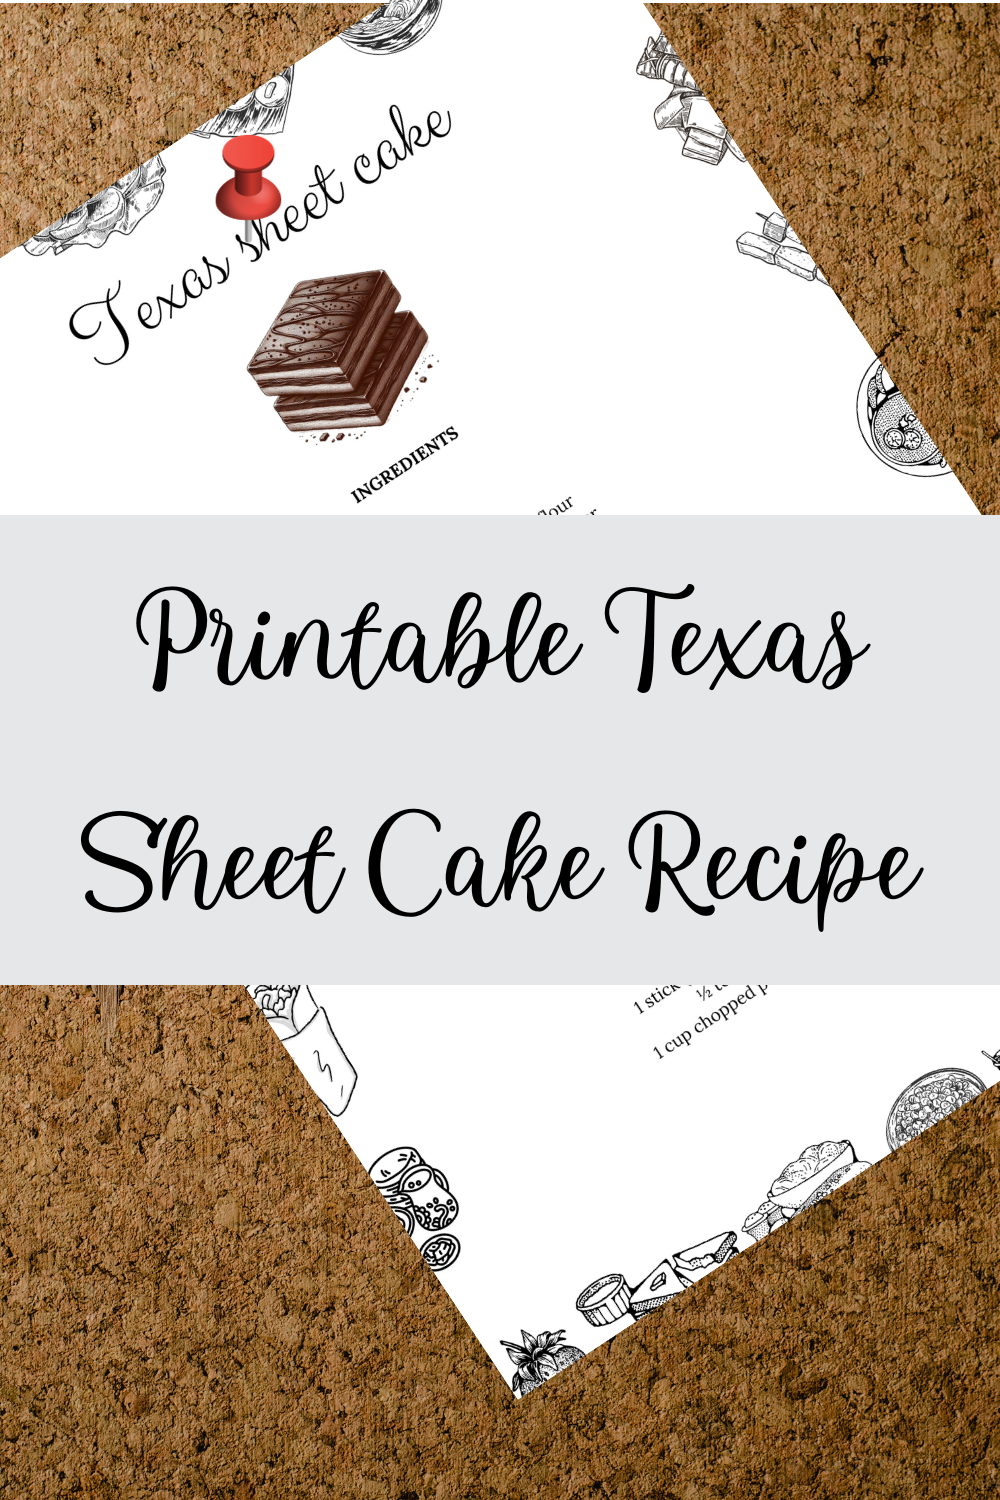 Printable Texas Sheet Cake Recipe